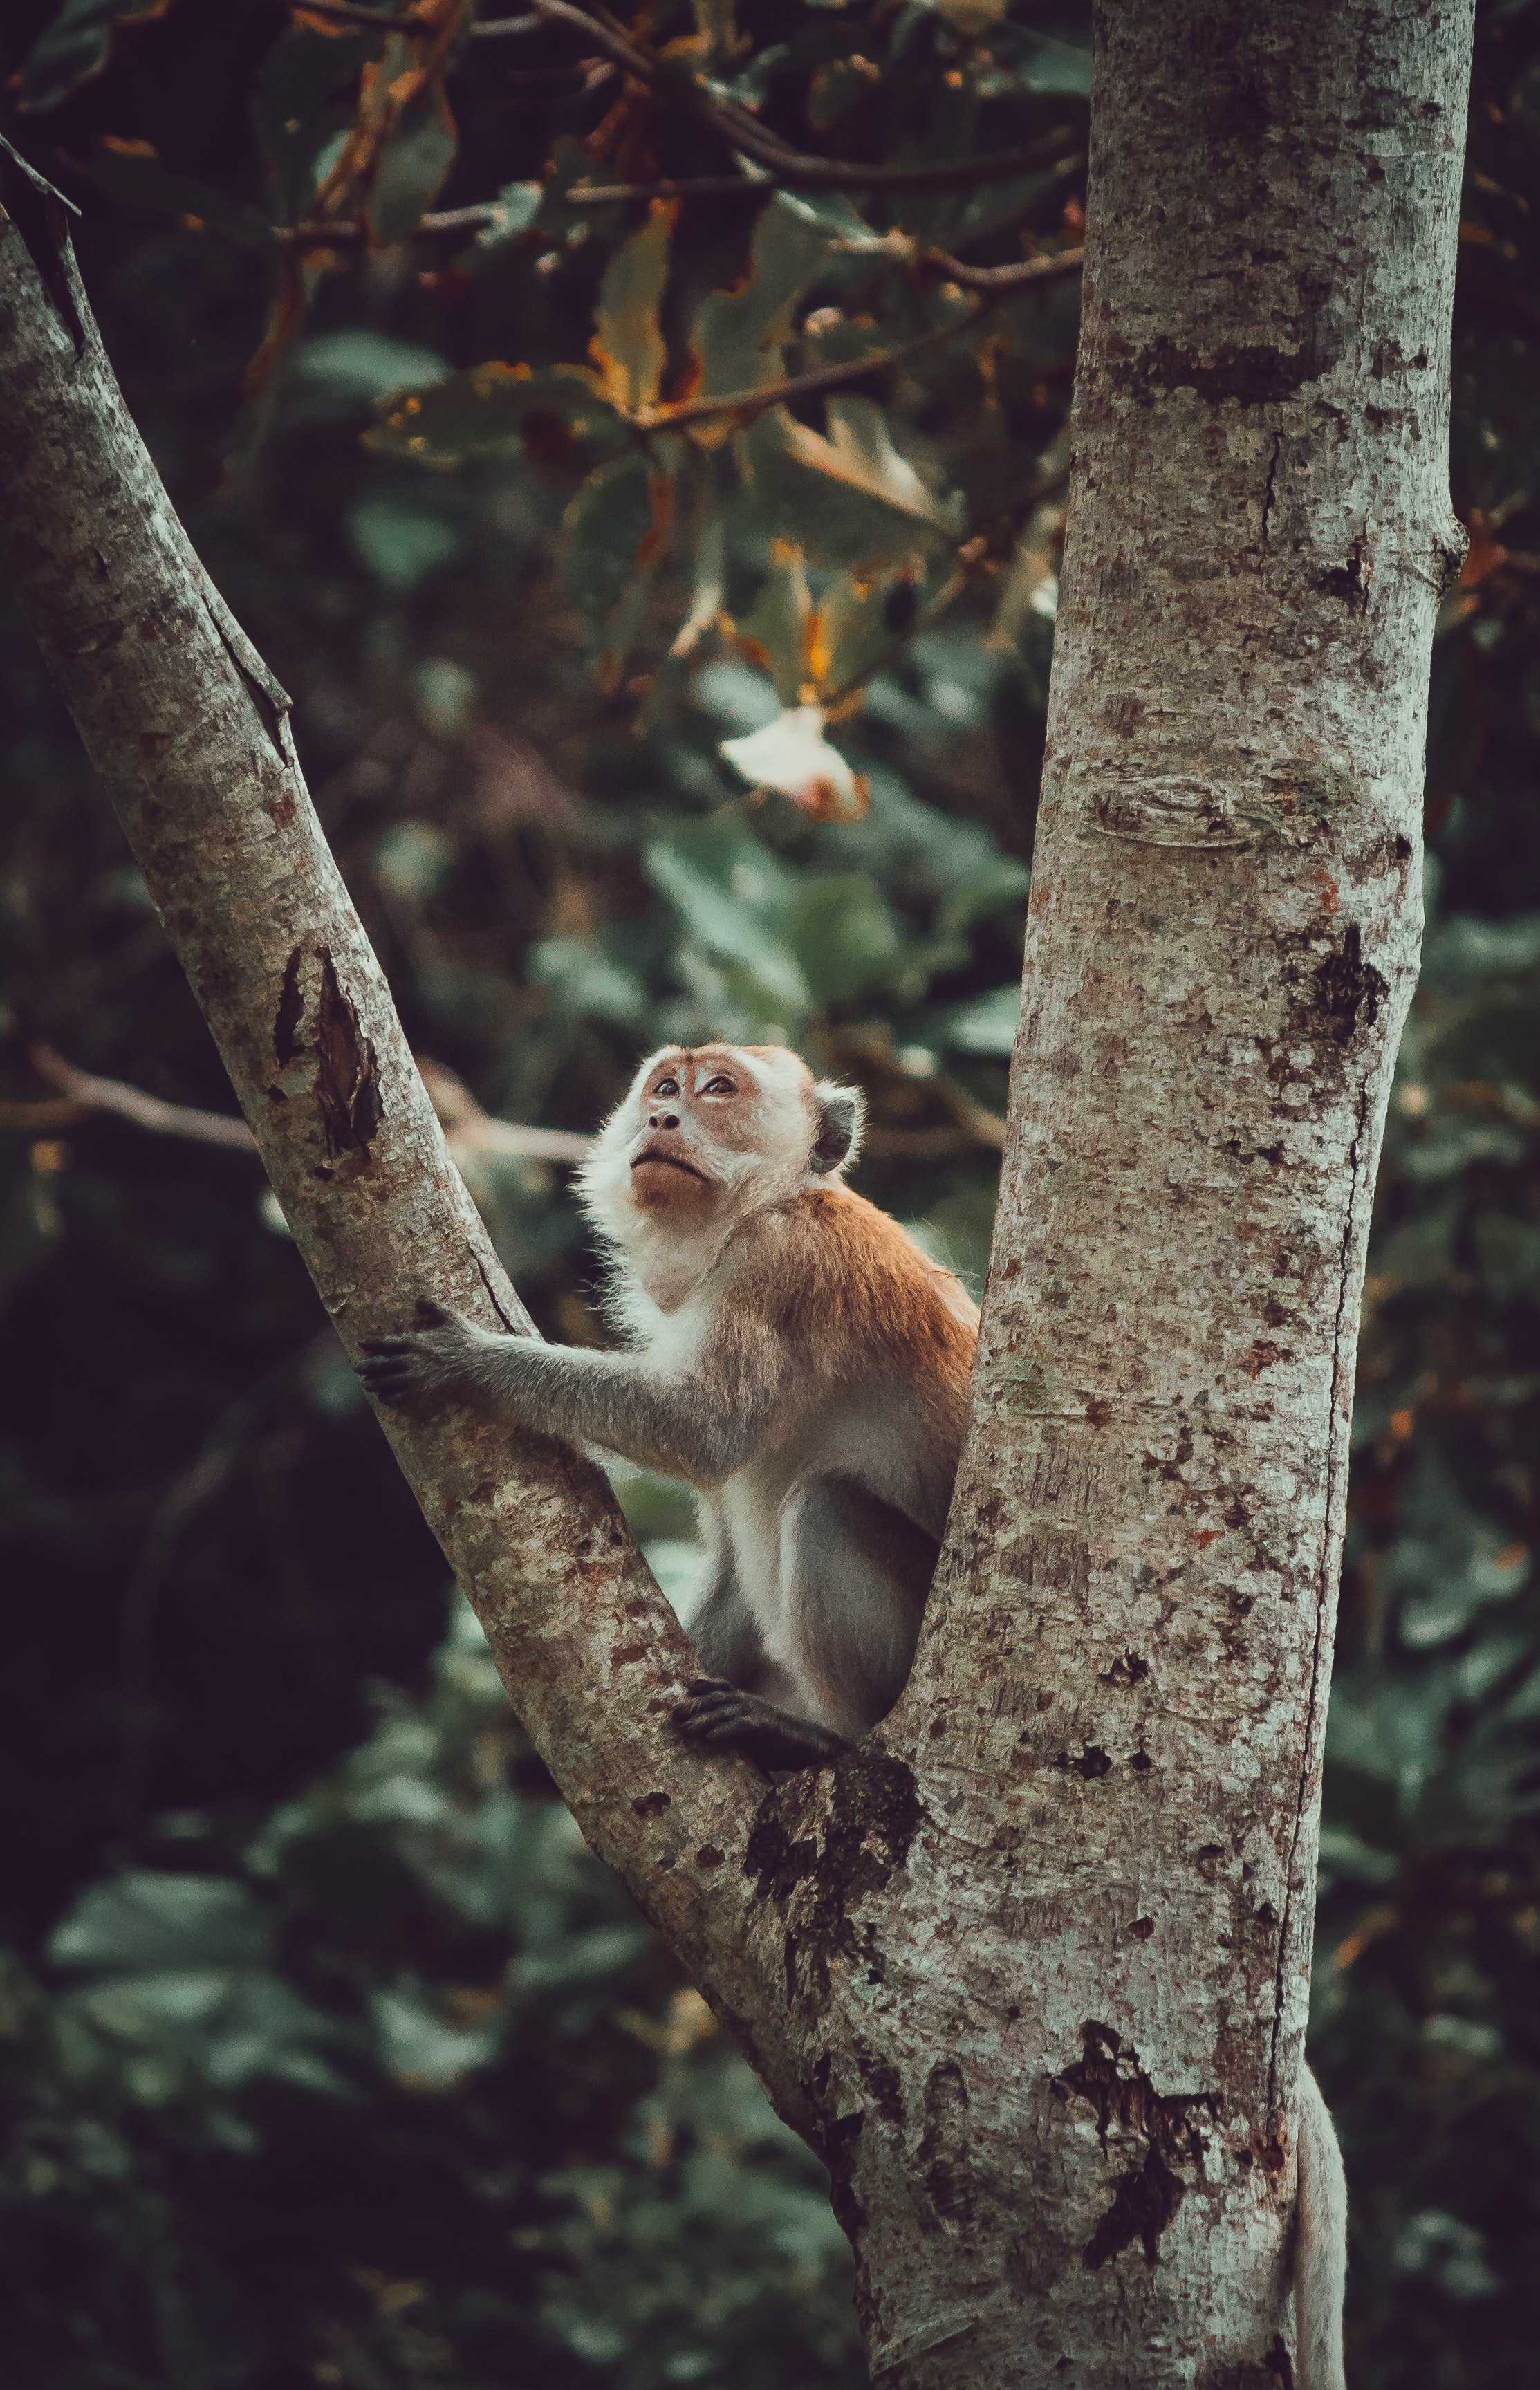 142715 descargar imagen animales, madera, árbol, un mono, mono, visión, opinión, lindo, querido, tití: fondos de pantalla y protectores de pantalla gratis